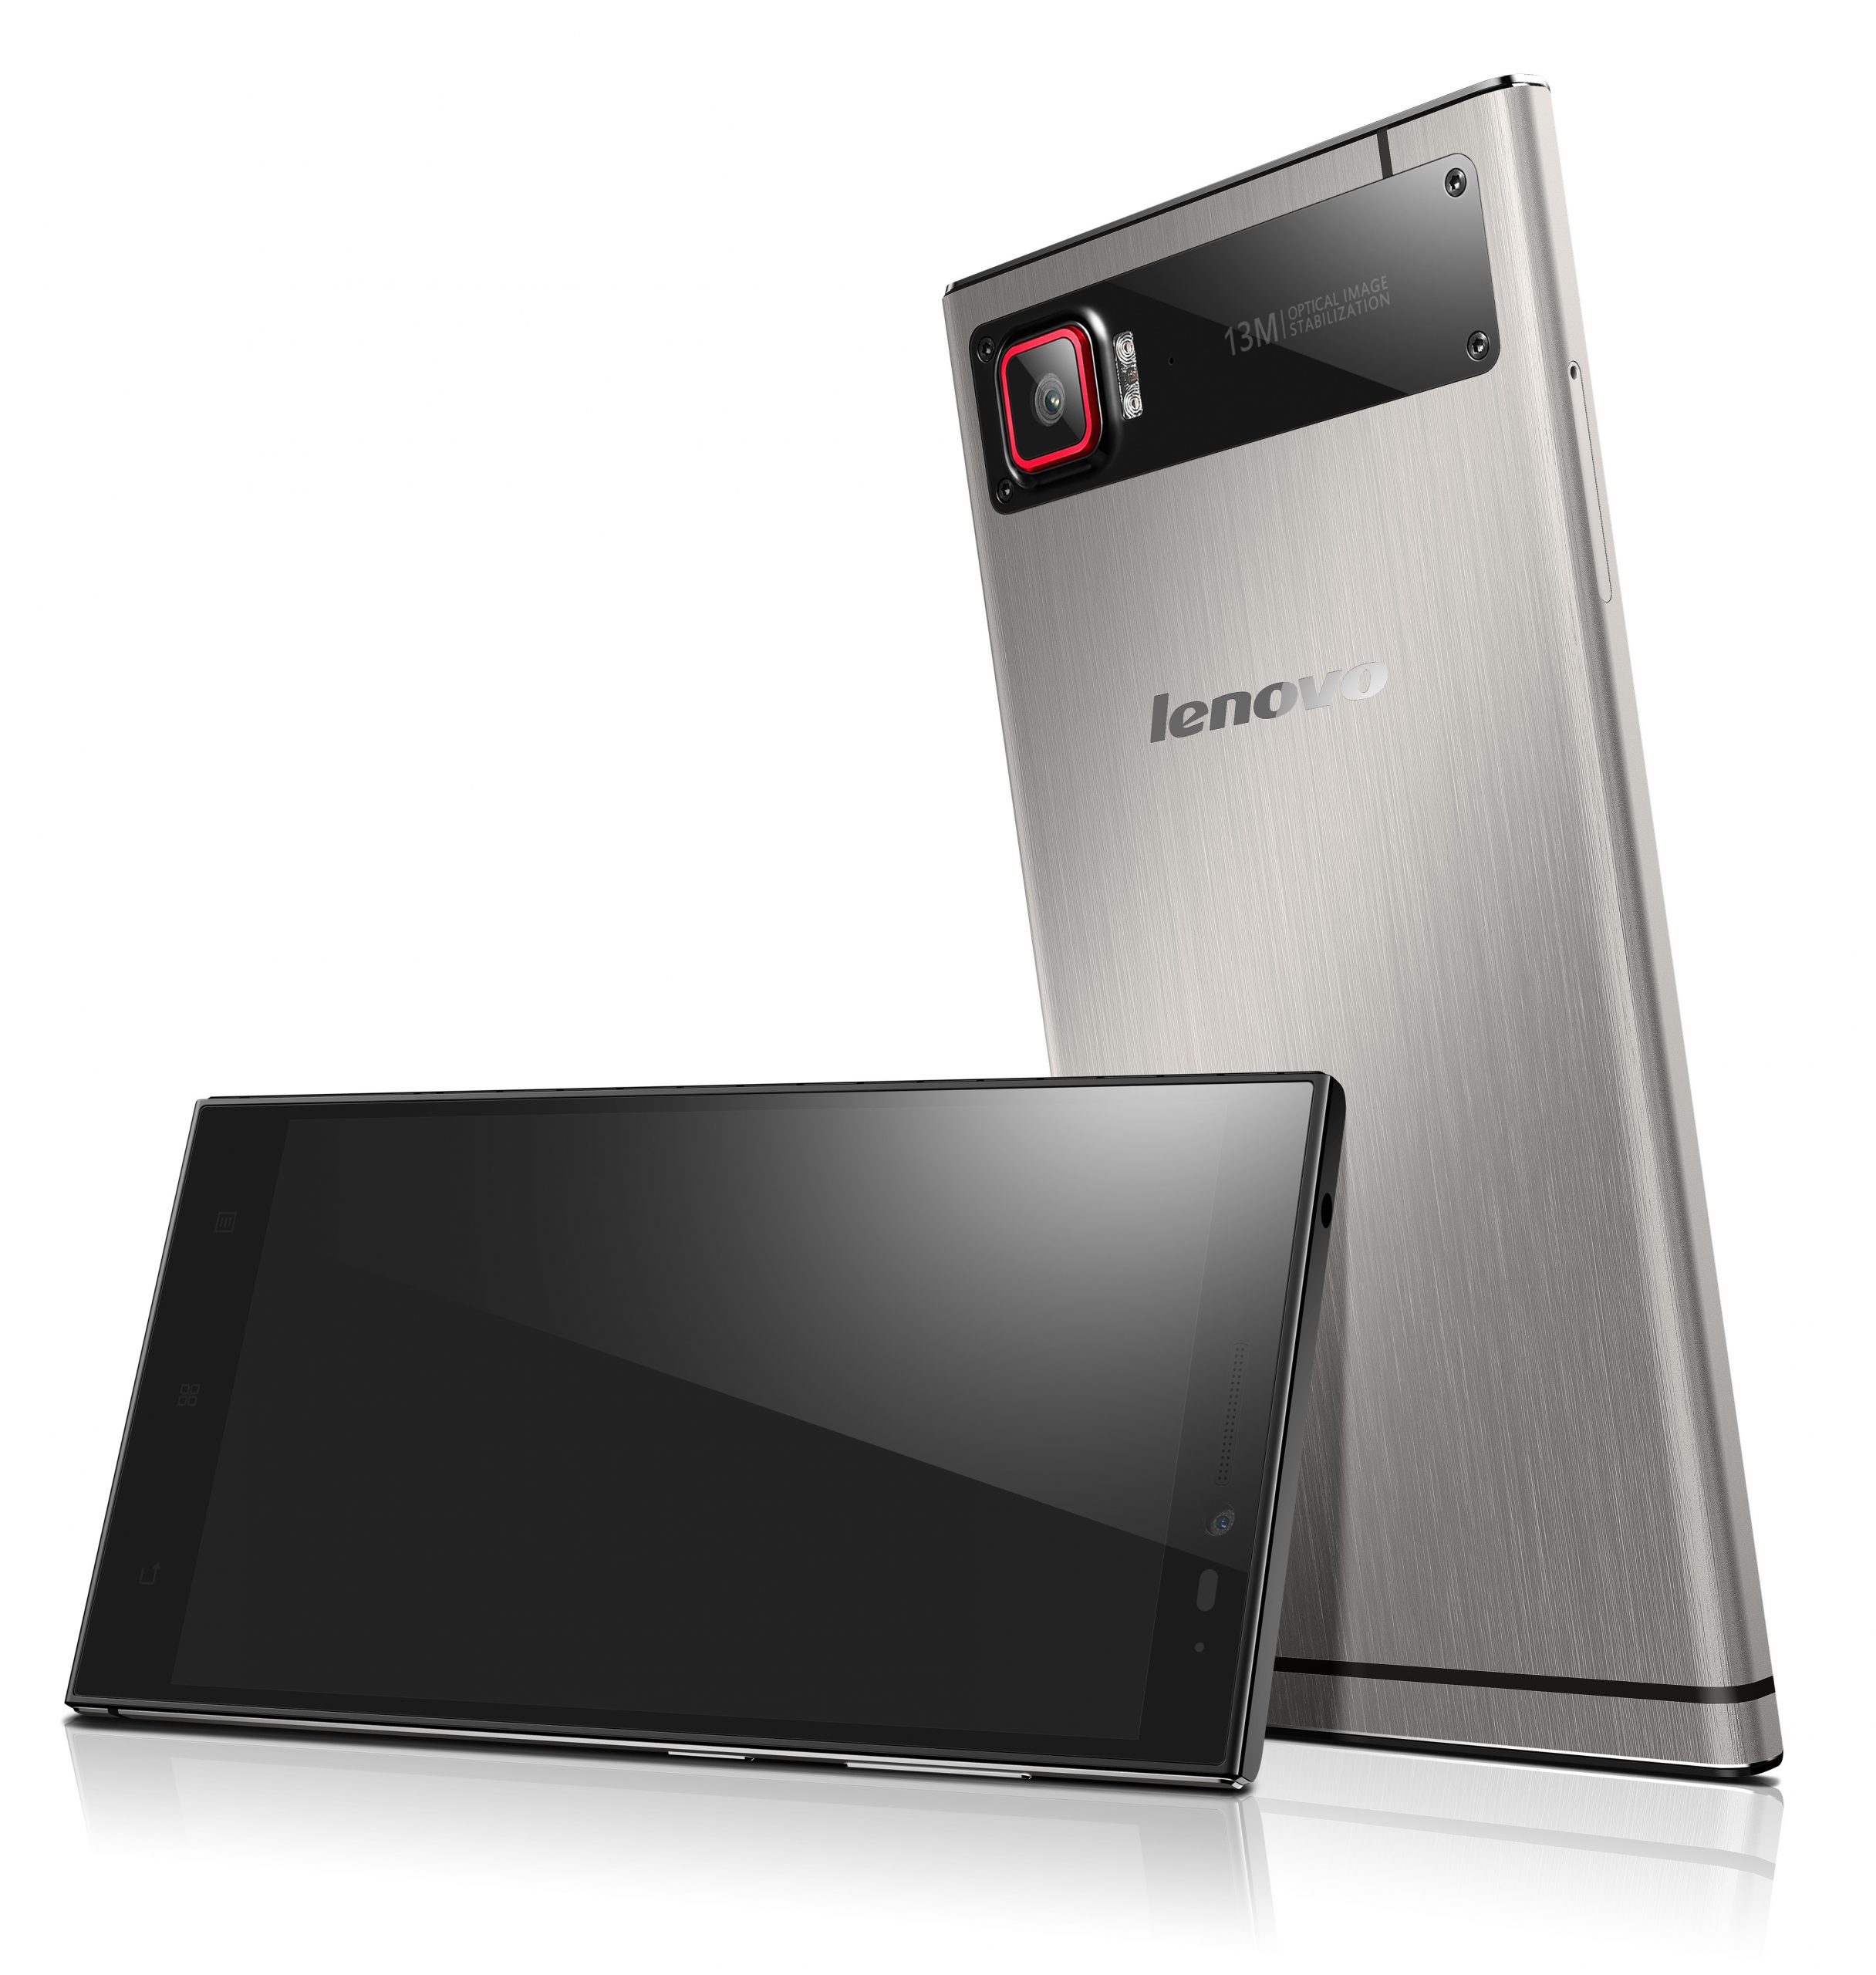 Lenovo revela dos nuevos teléfonos inteligentes Vibe